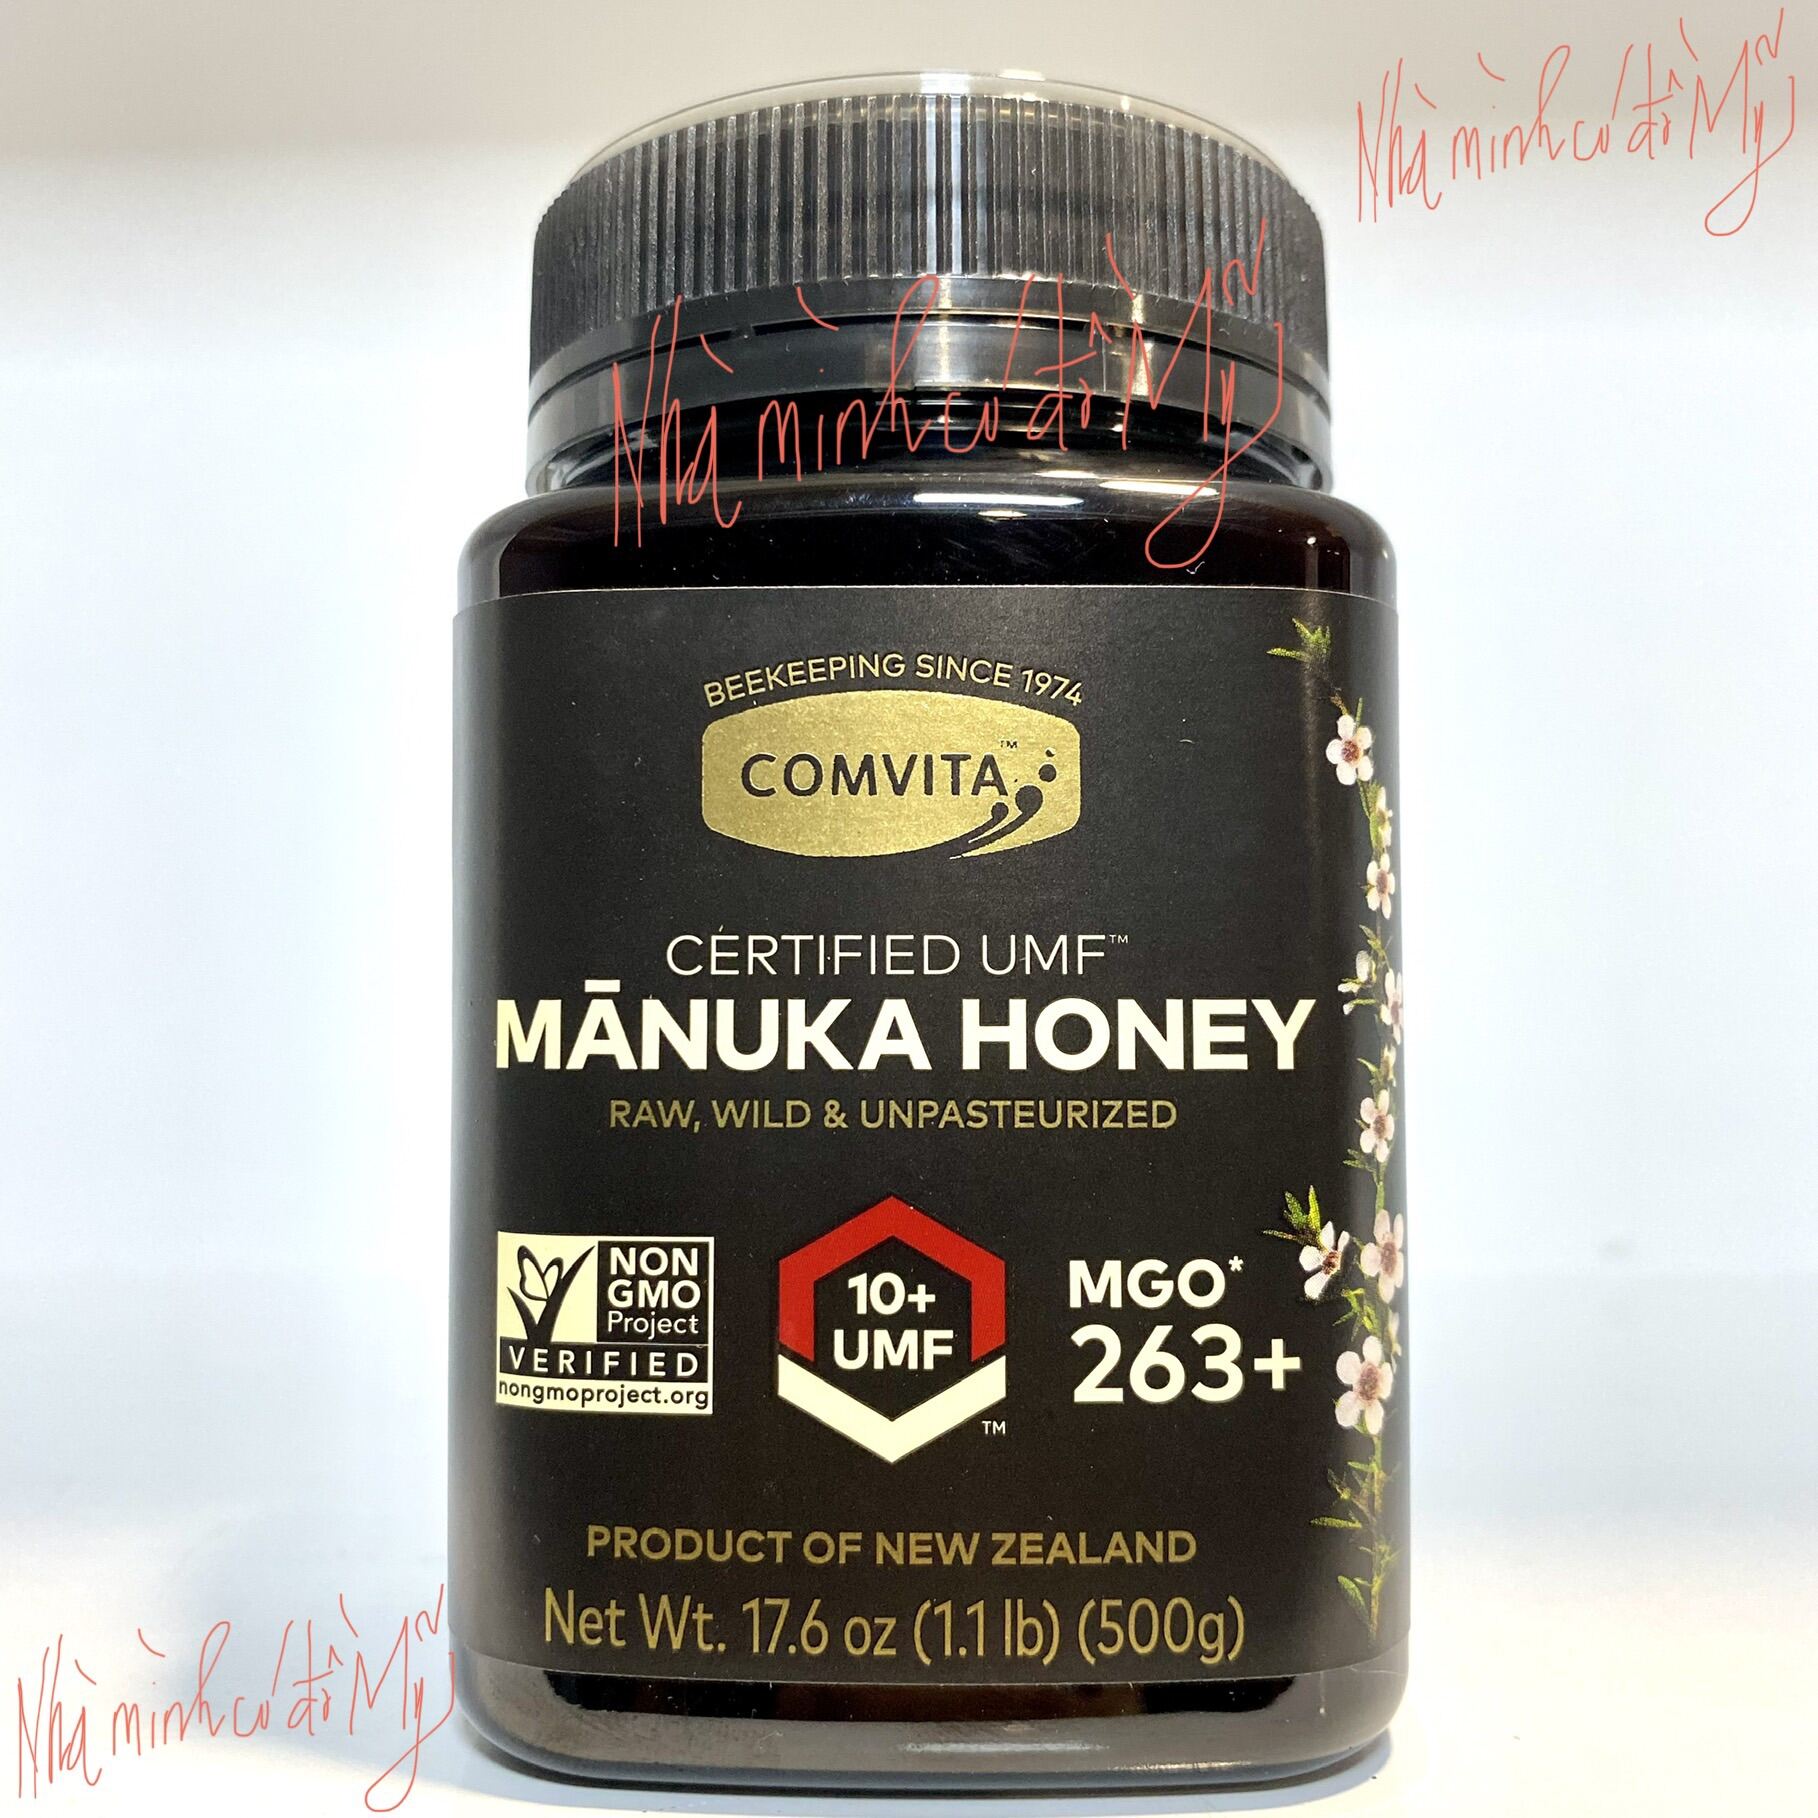 Mật ong COMVITA MANUKA honey UMF10+ 500g MGO 263+ từ New Zealand raw